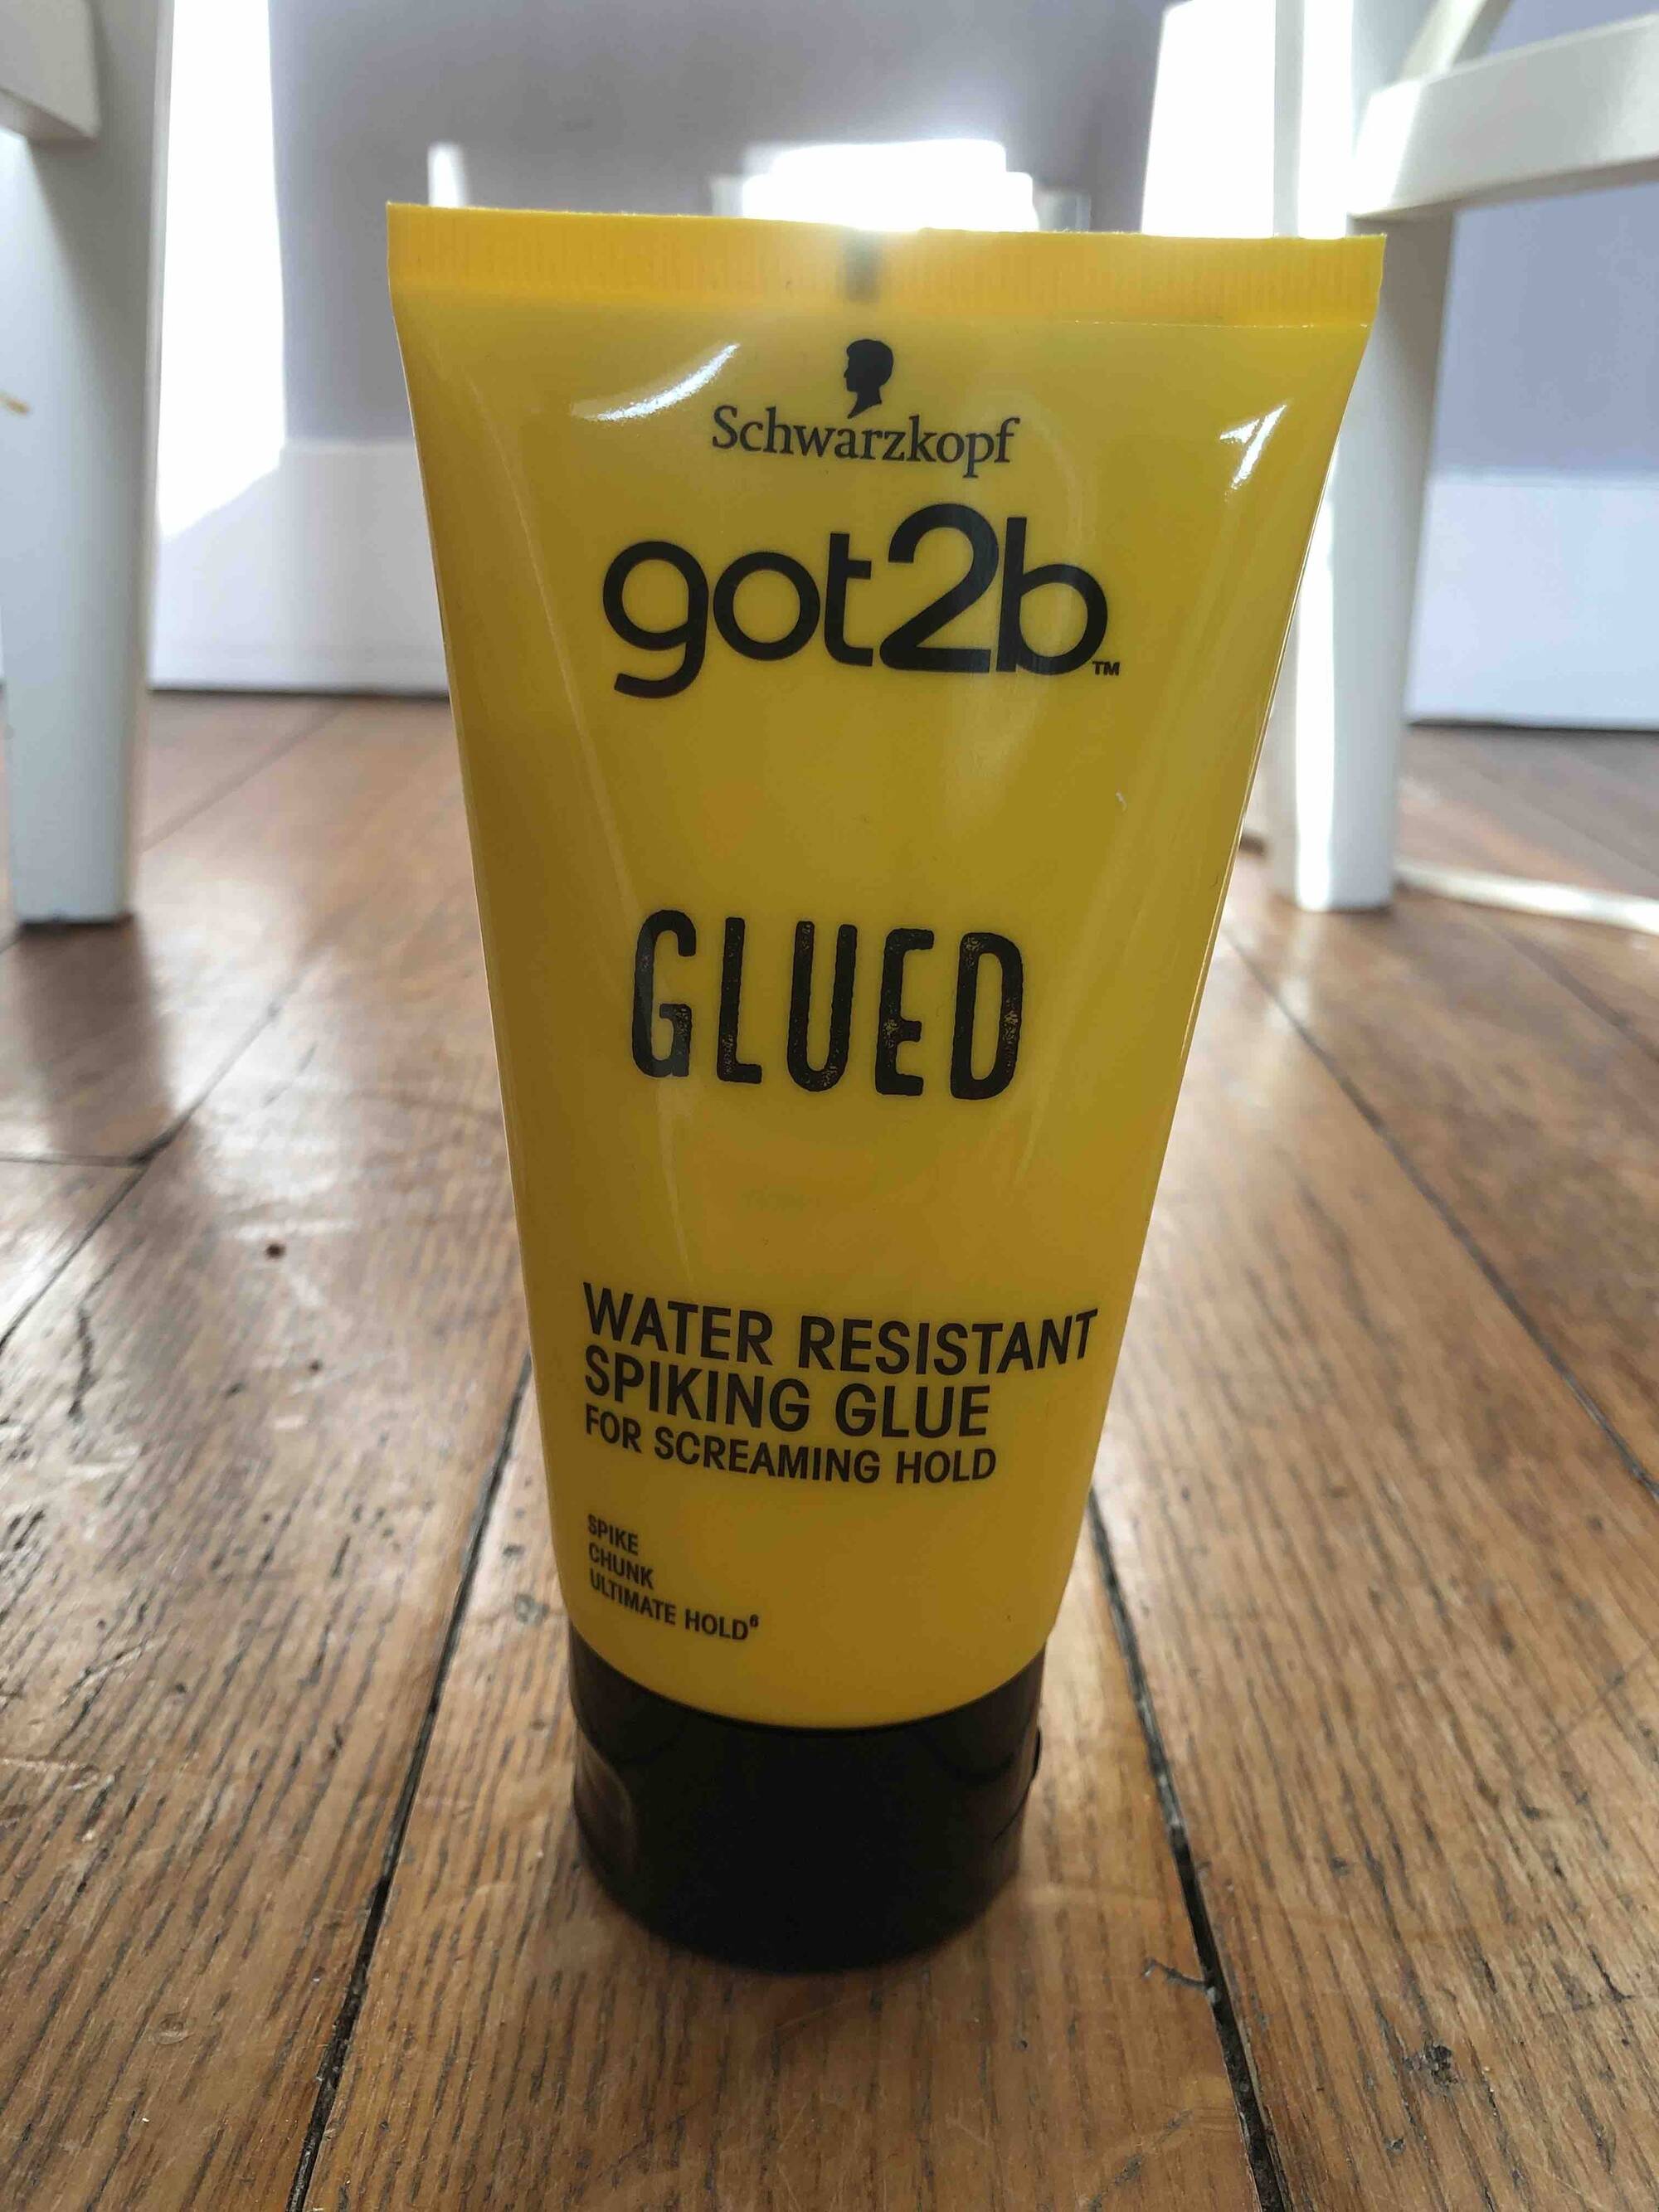 SCHWARZKOPF - Got2b glued - Water resistant spiking glue